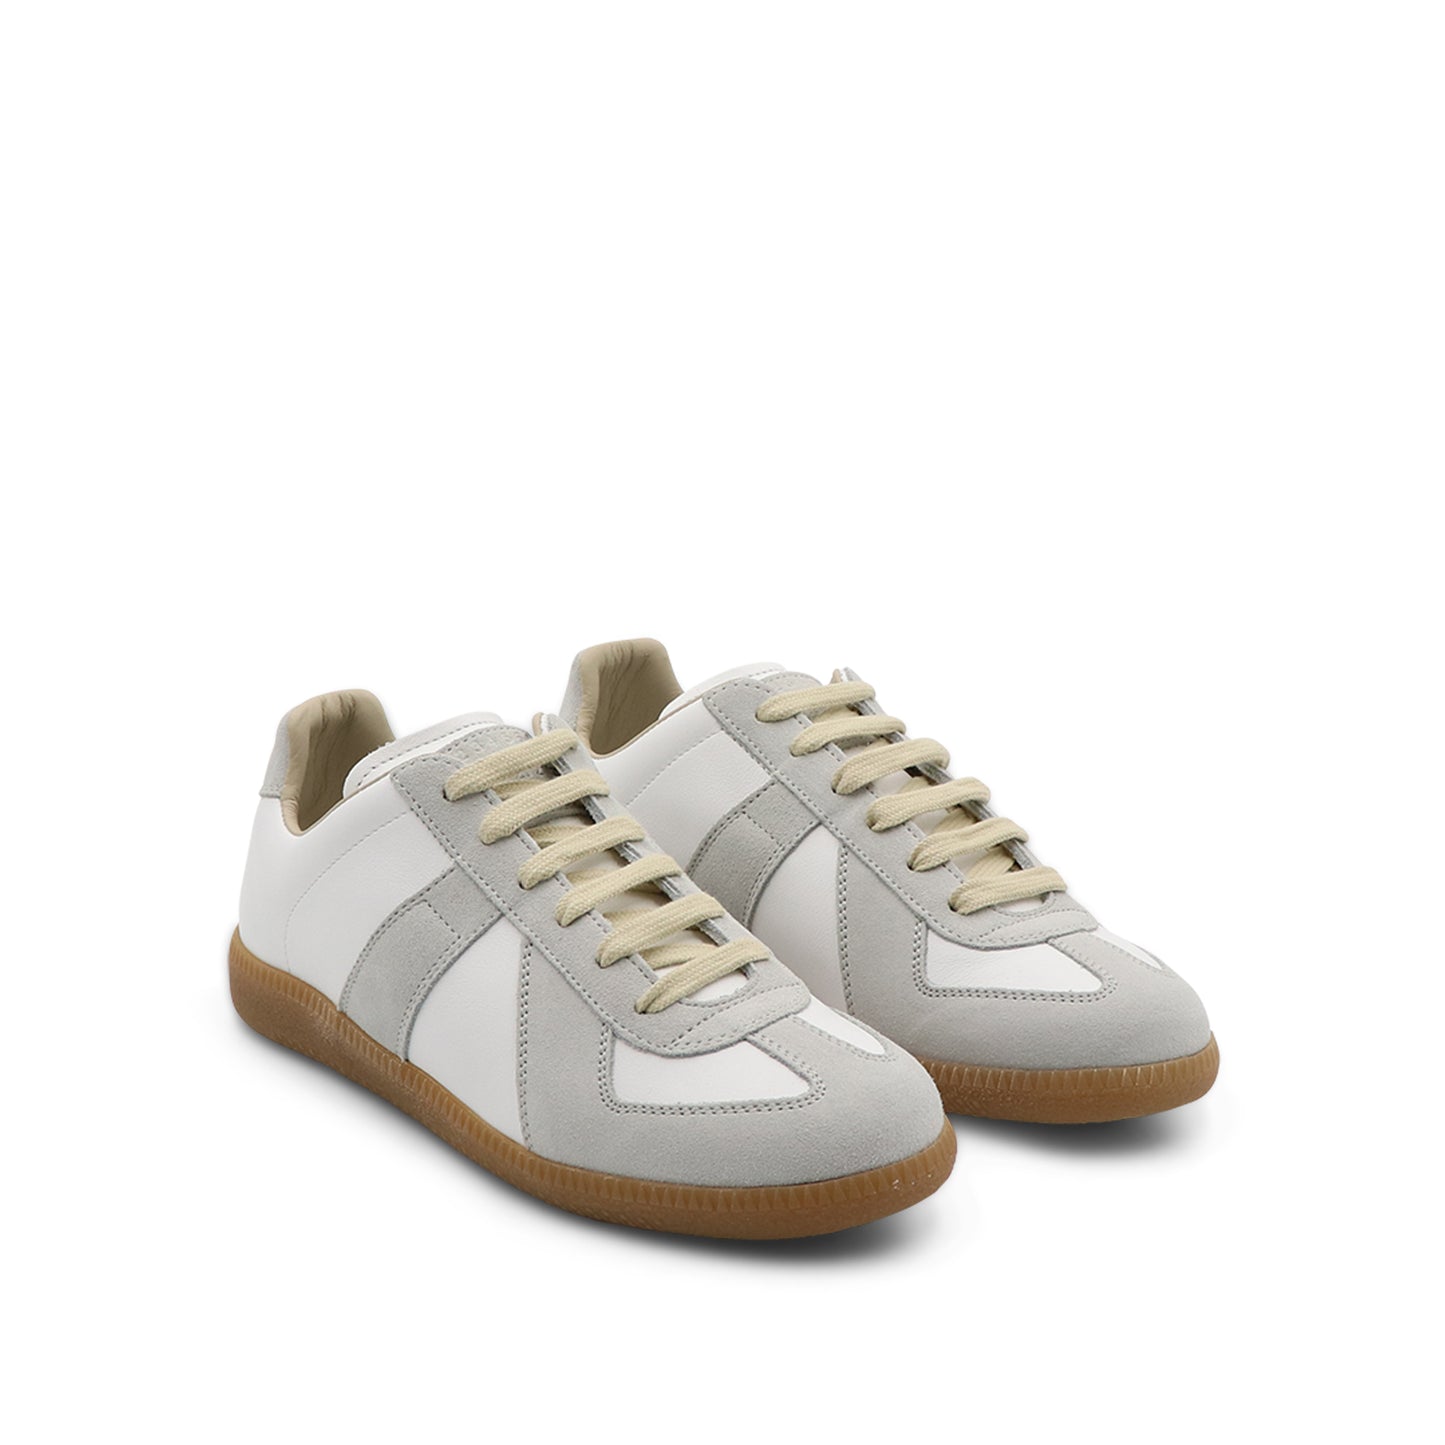 Replica Leather Sneakers in White